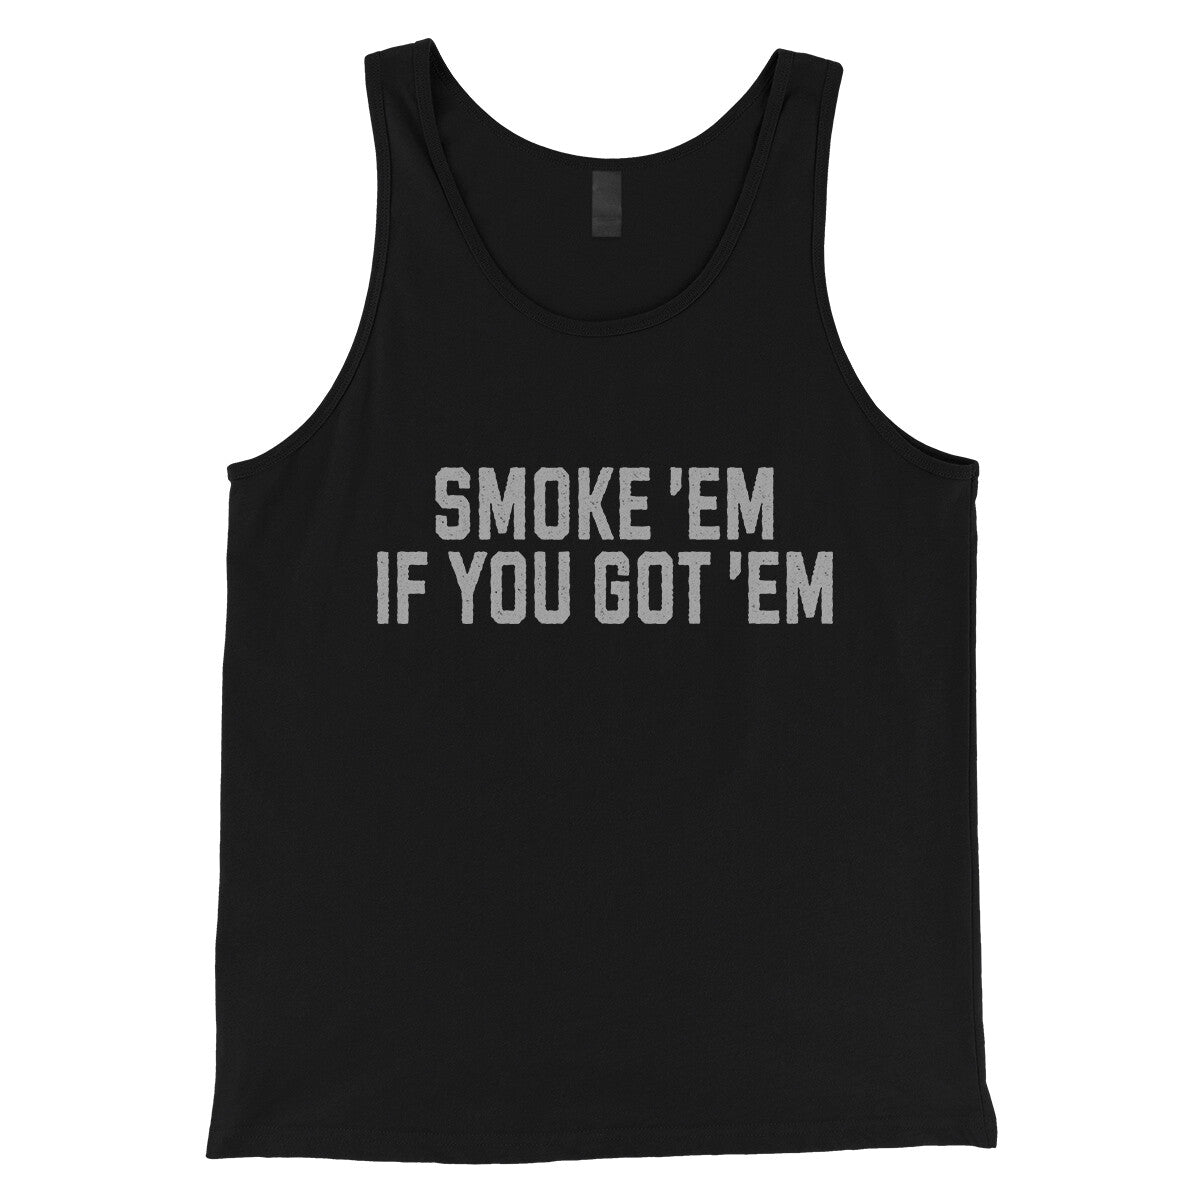 Smoke ‘em If you Got ‘em in Black Color